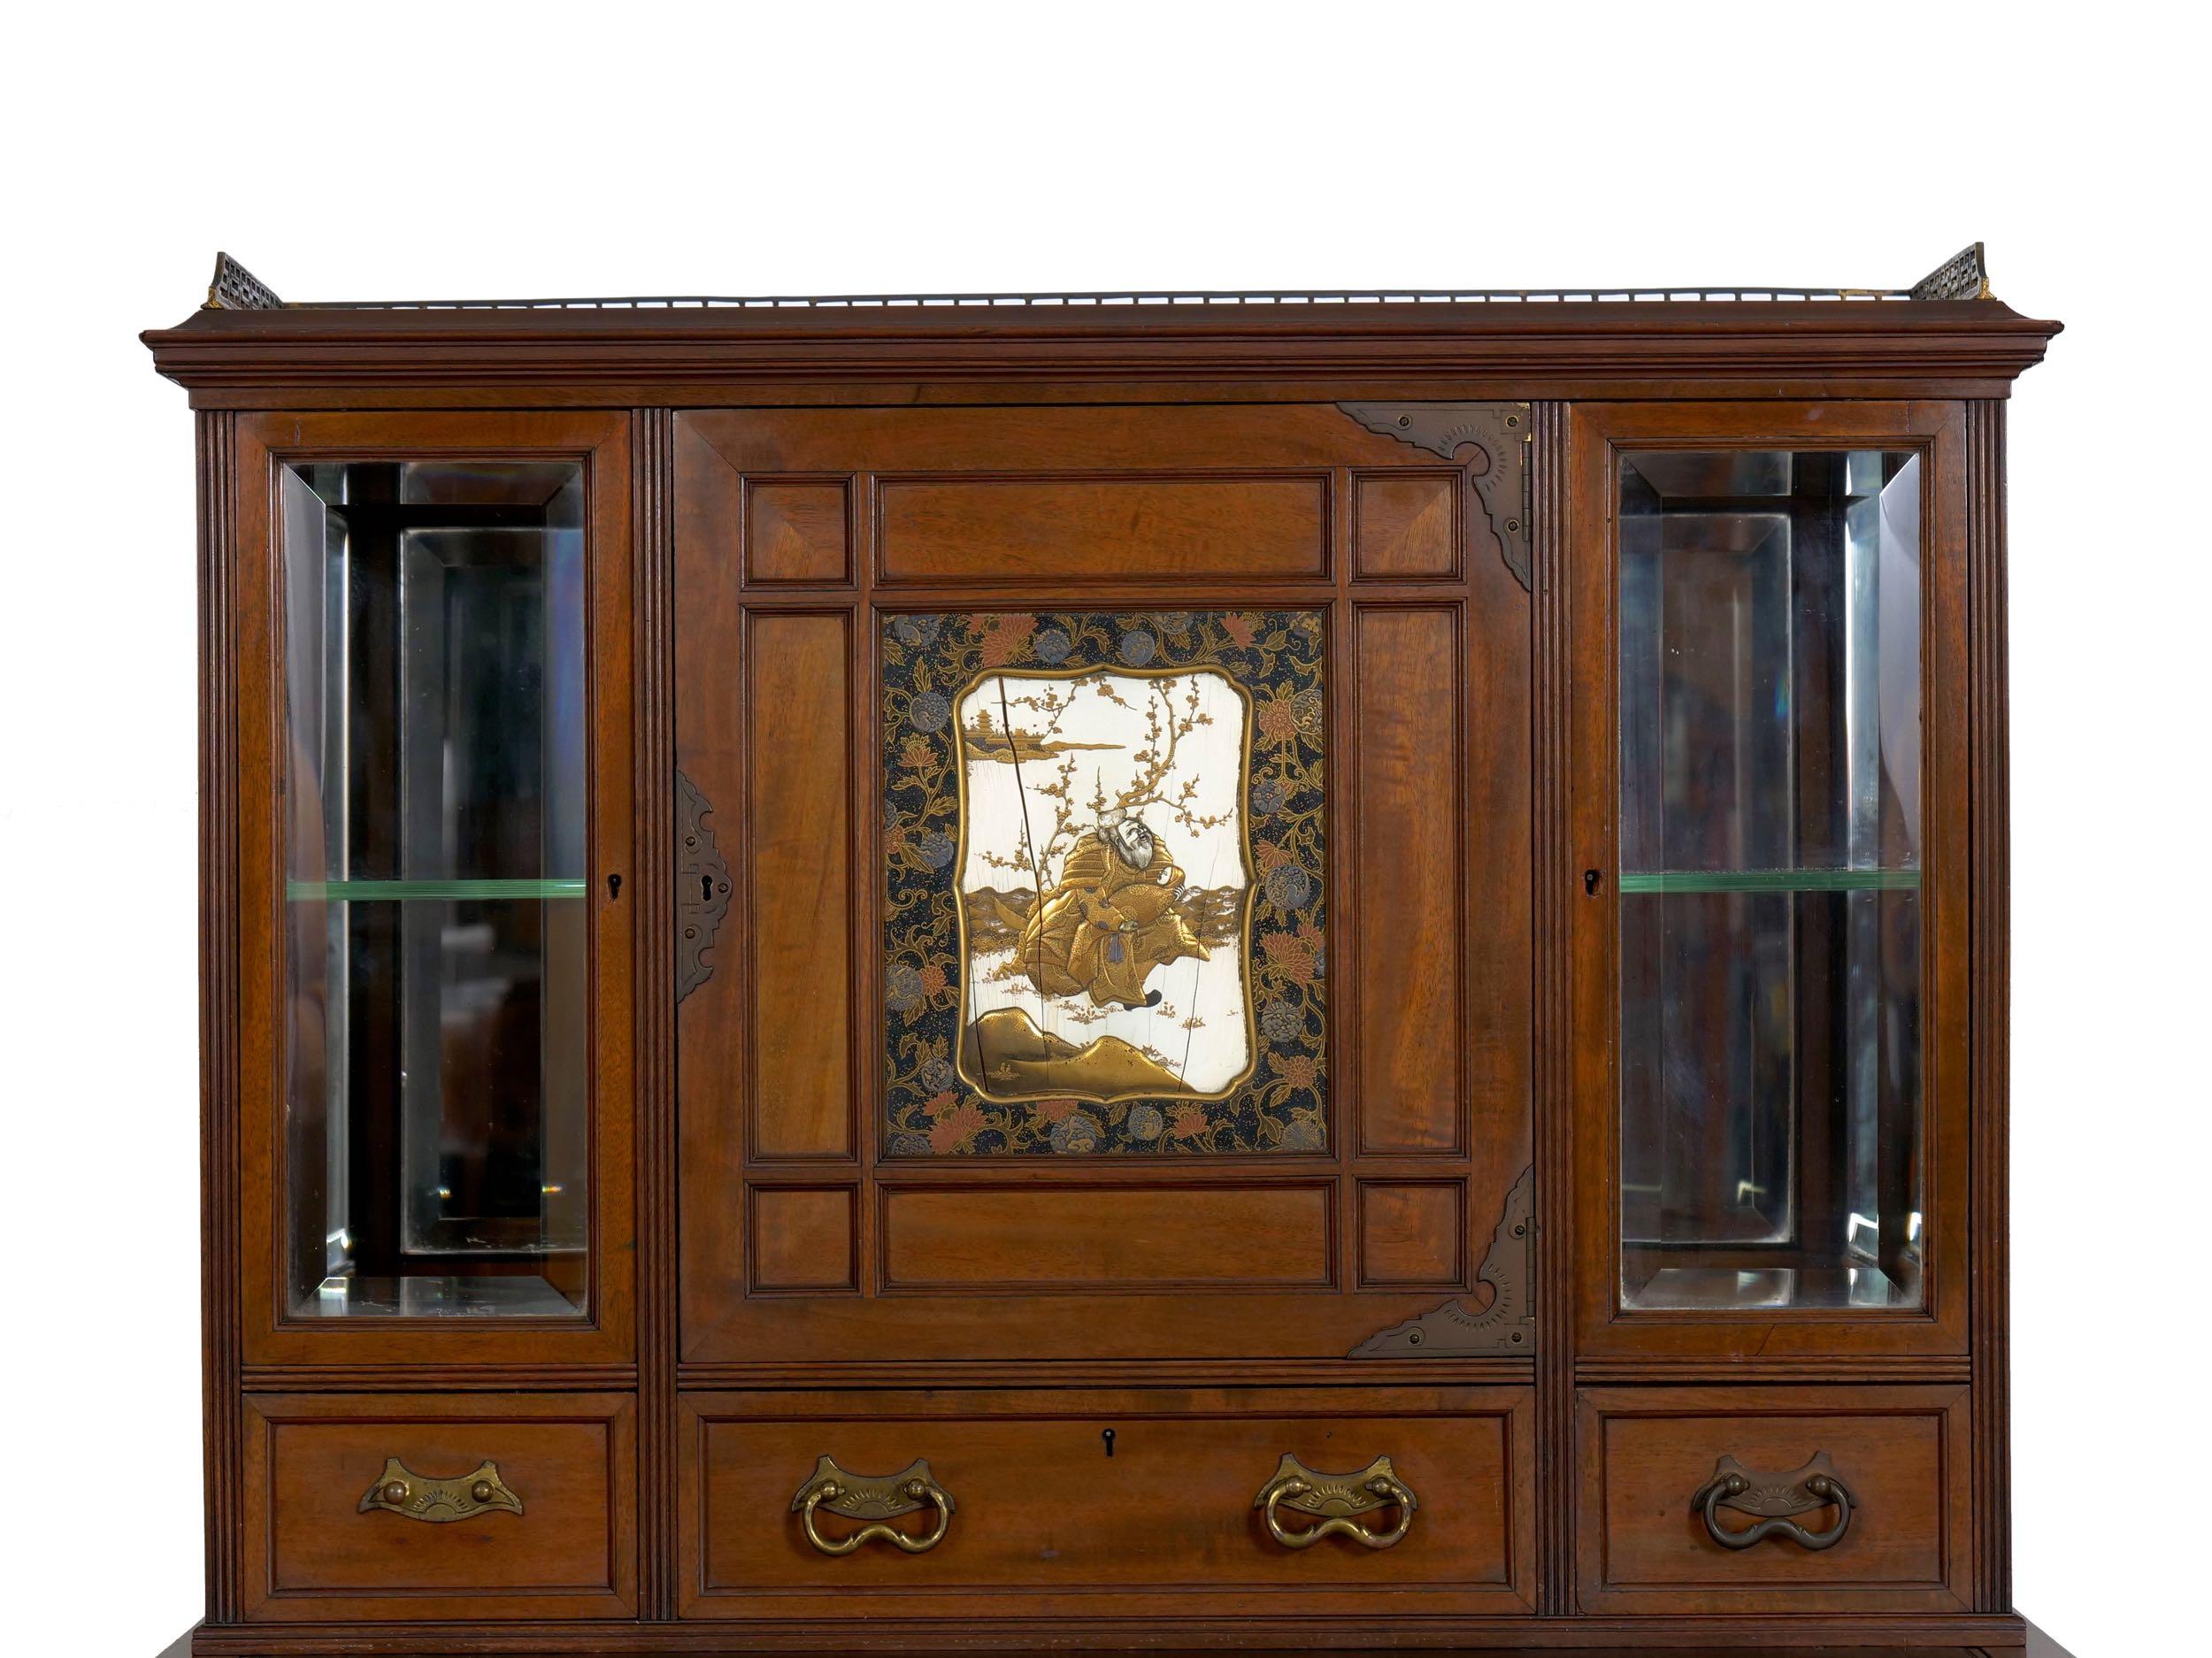 English Aesthetic Movement Mahogany Bonheur du Jour Secretary Desk Cabinet, circa 1880